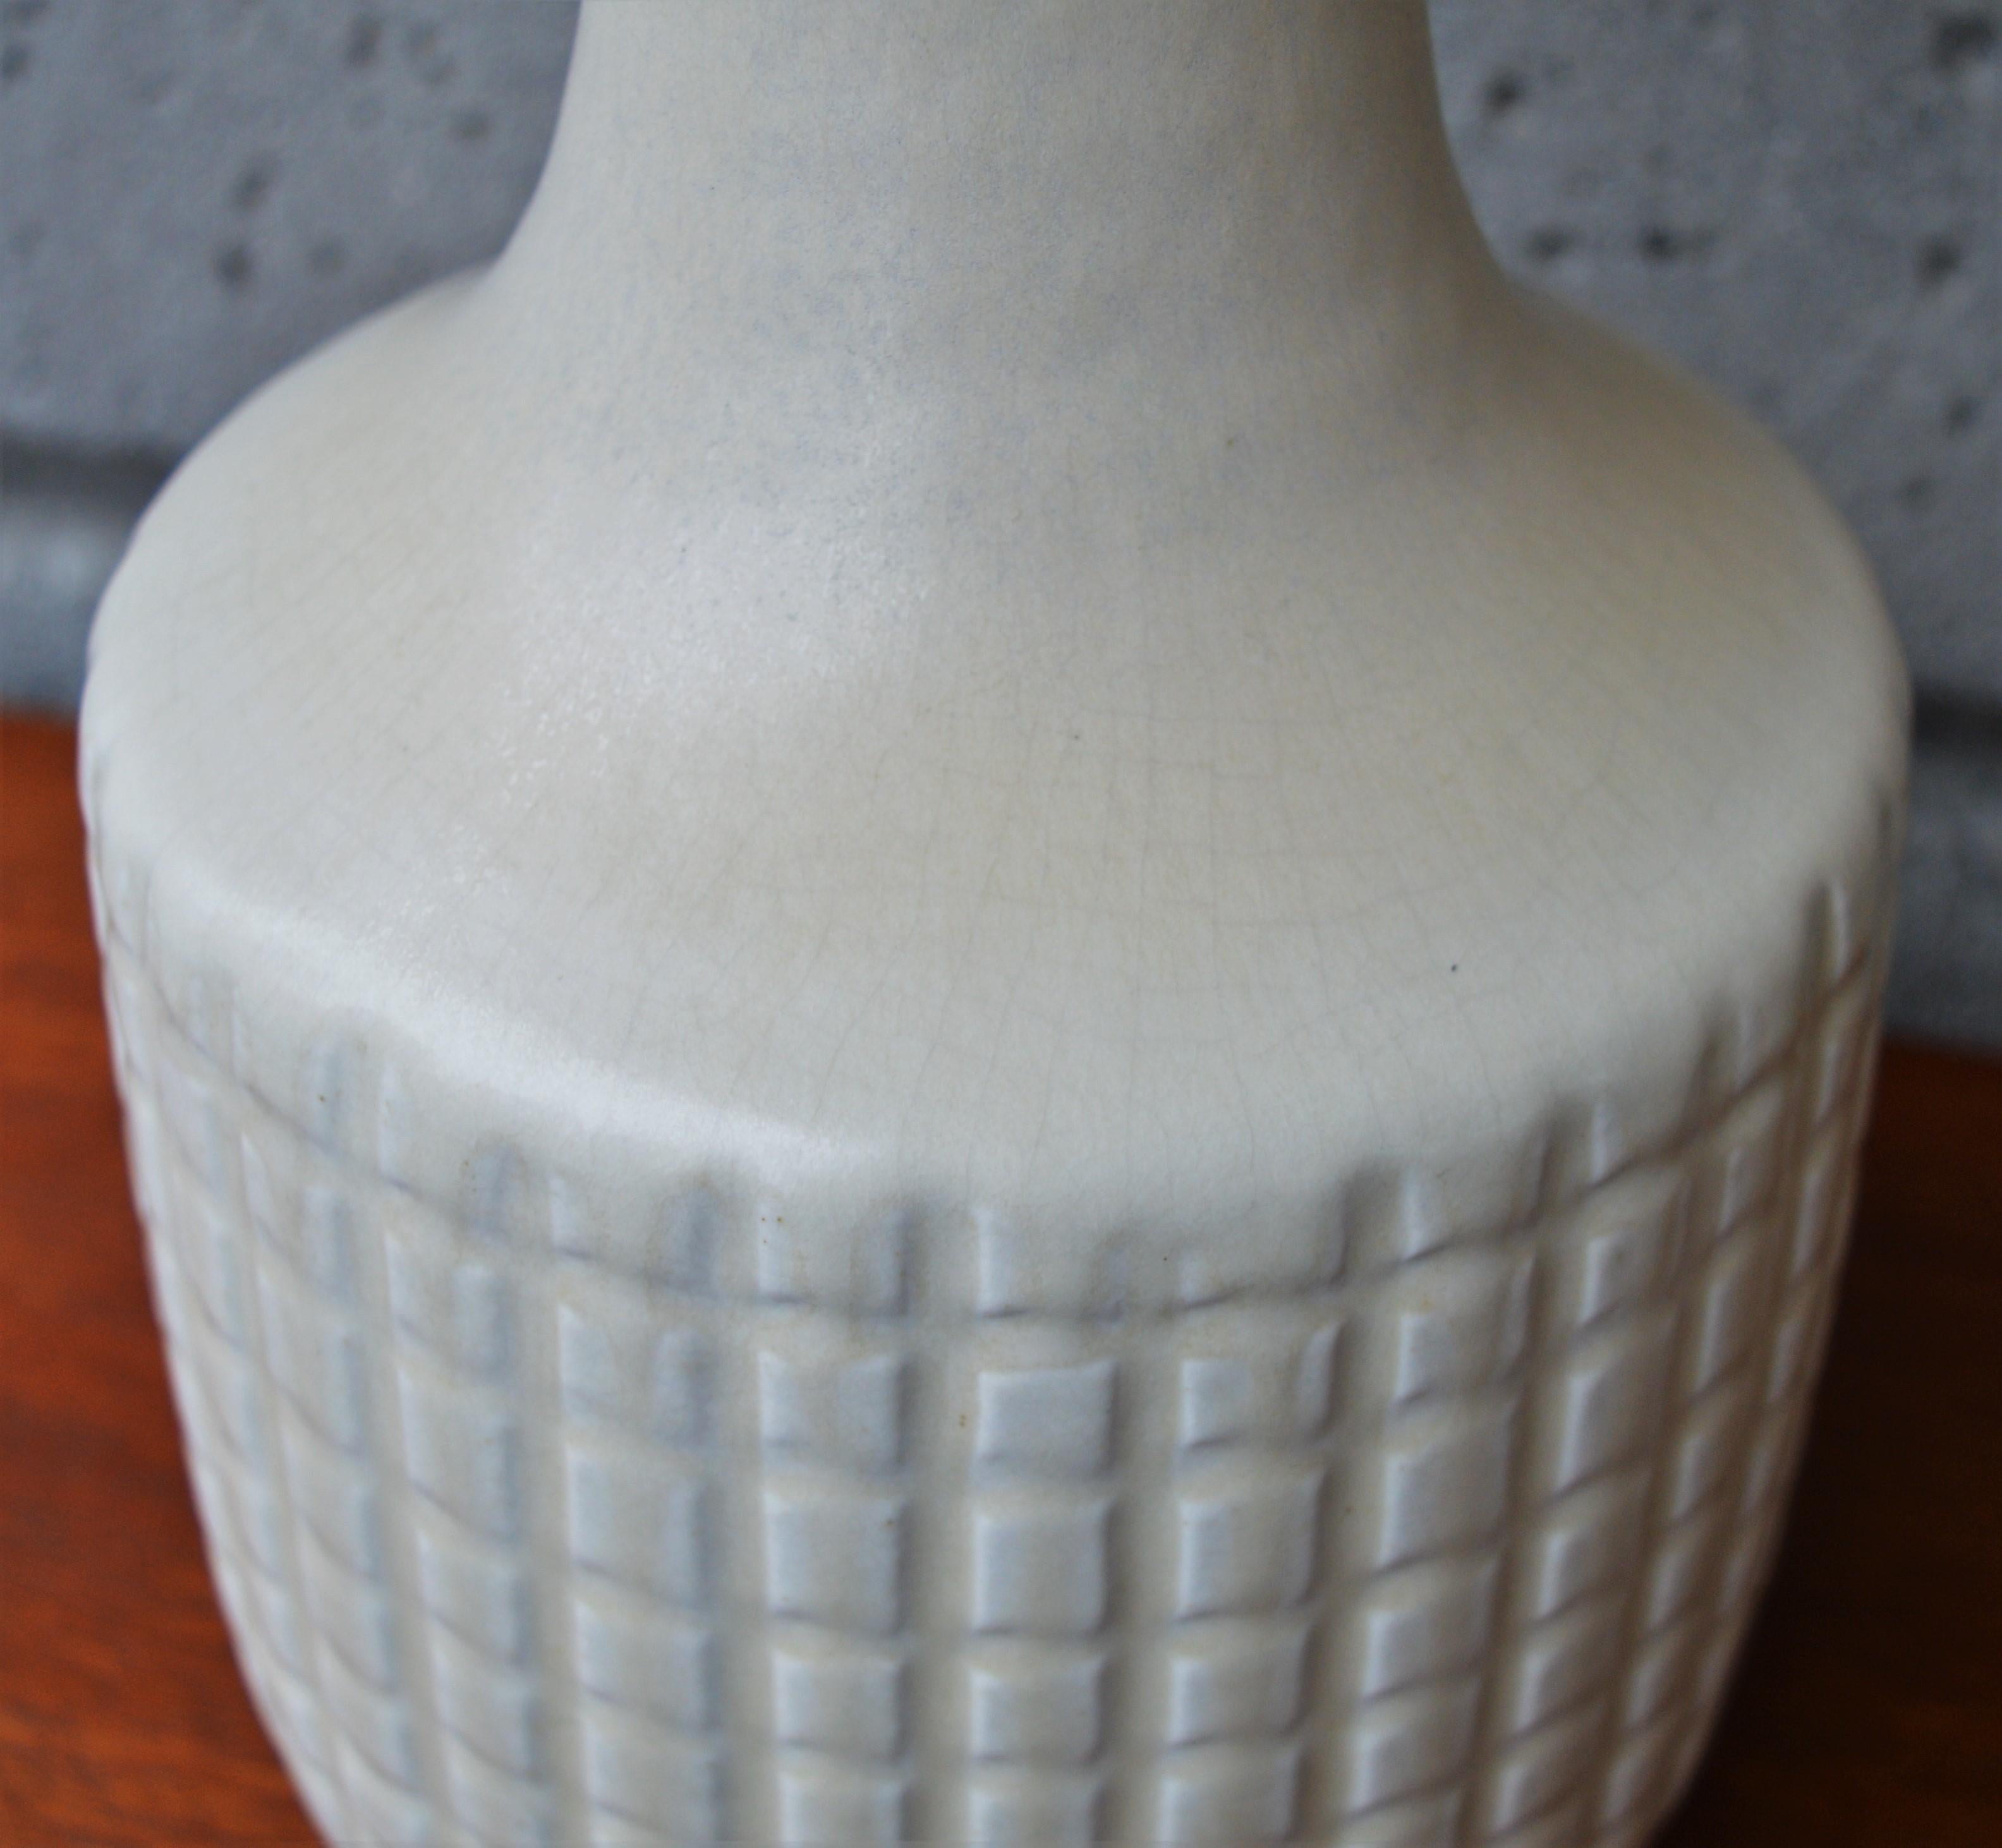 Incised Cream Ceramic Lotte & Gunnar Bostlund Lamps with Fiberglass Shades, Pair For Sale 1